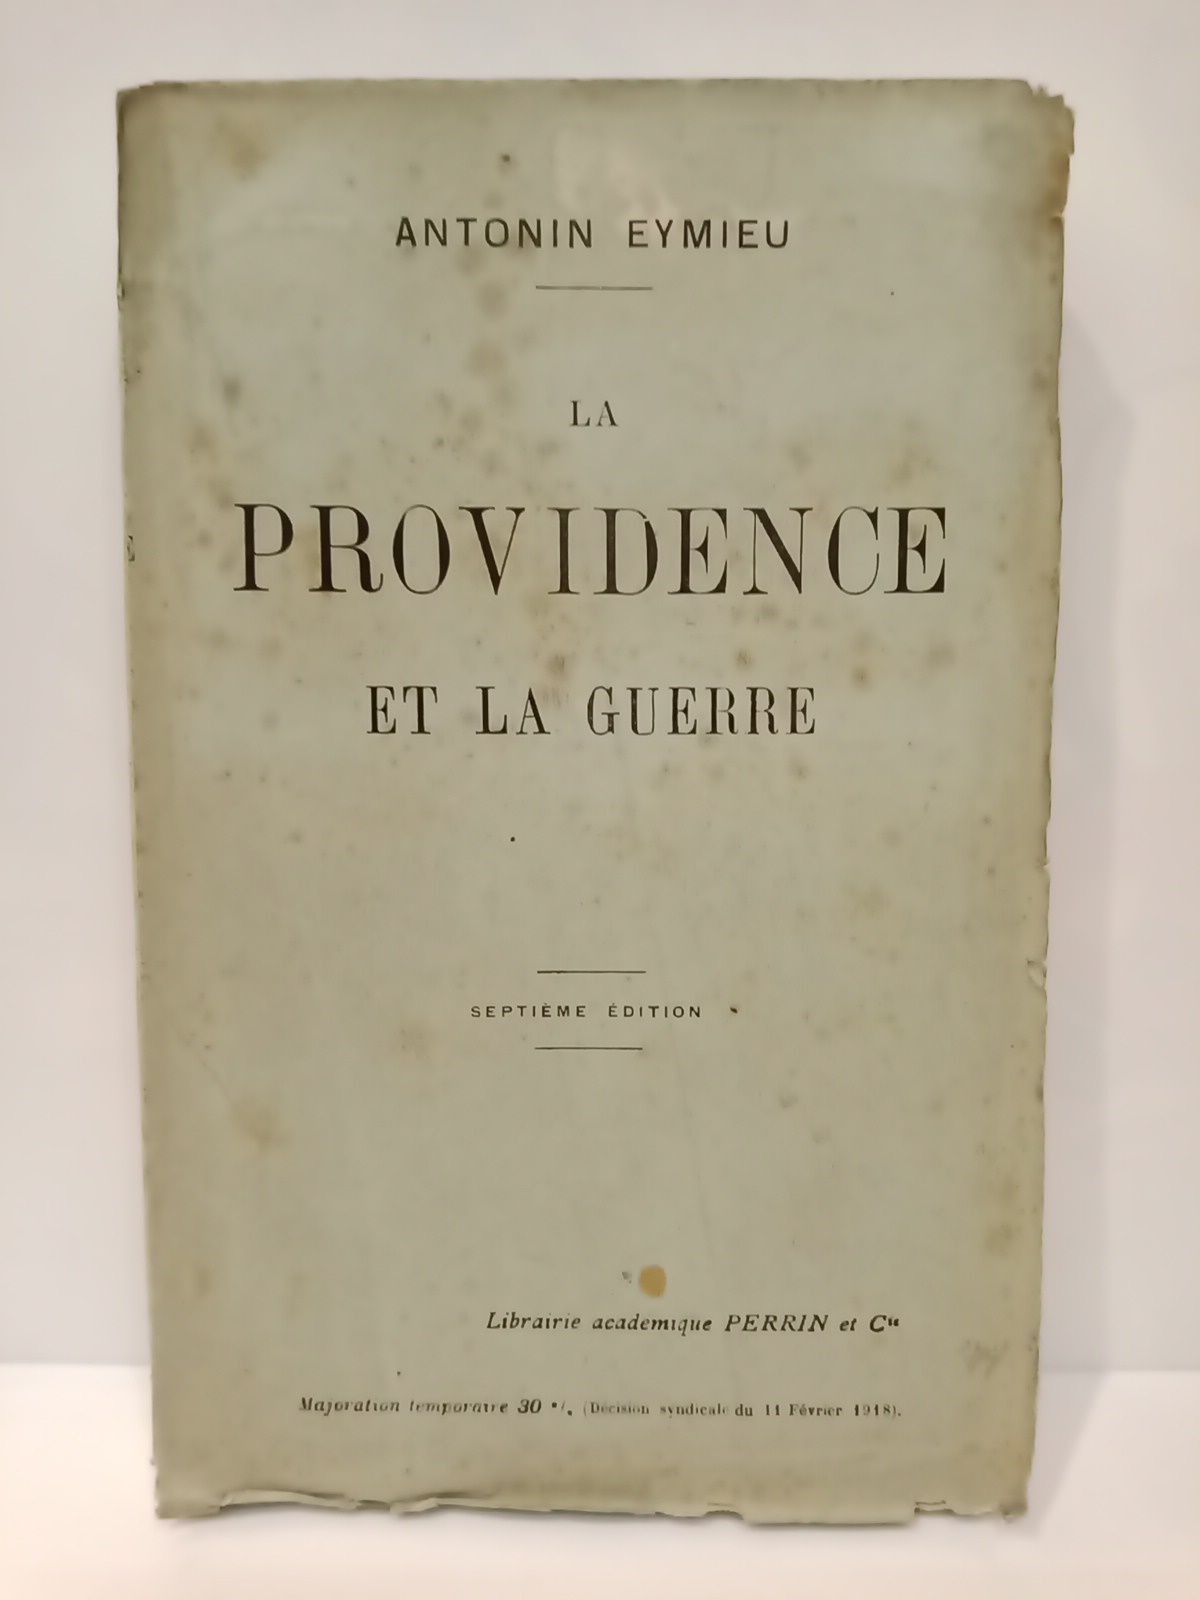 EYMIEU, Antonin - La Providence et la Guerre